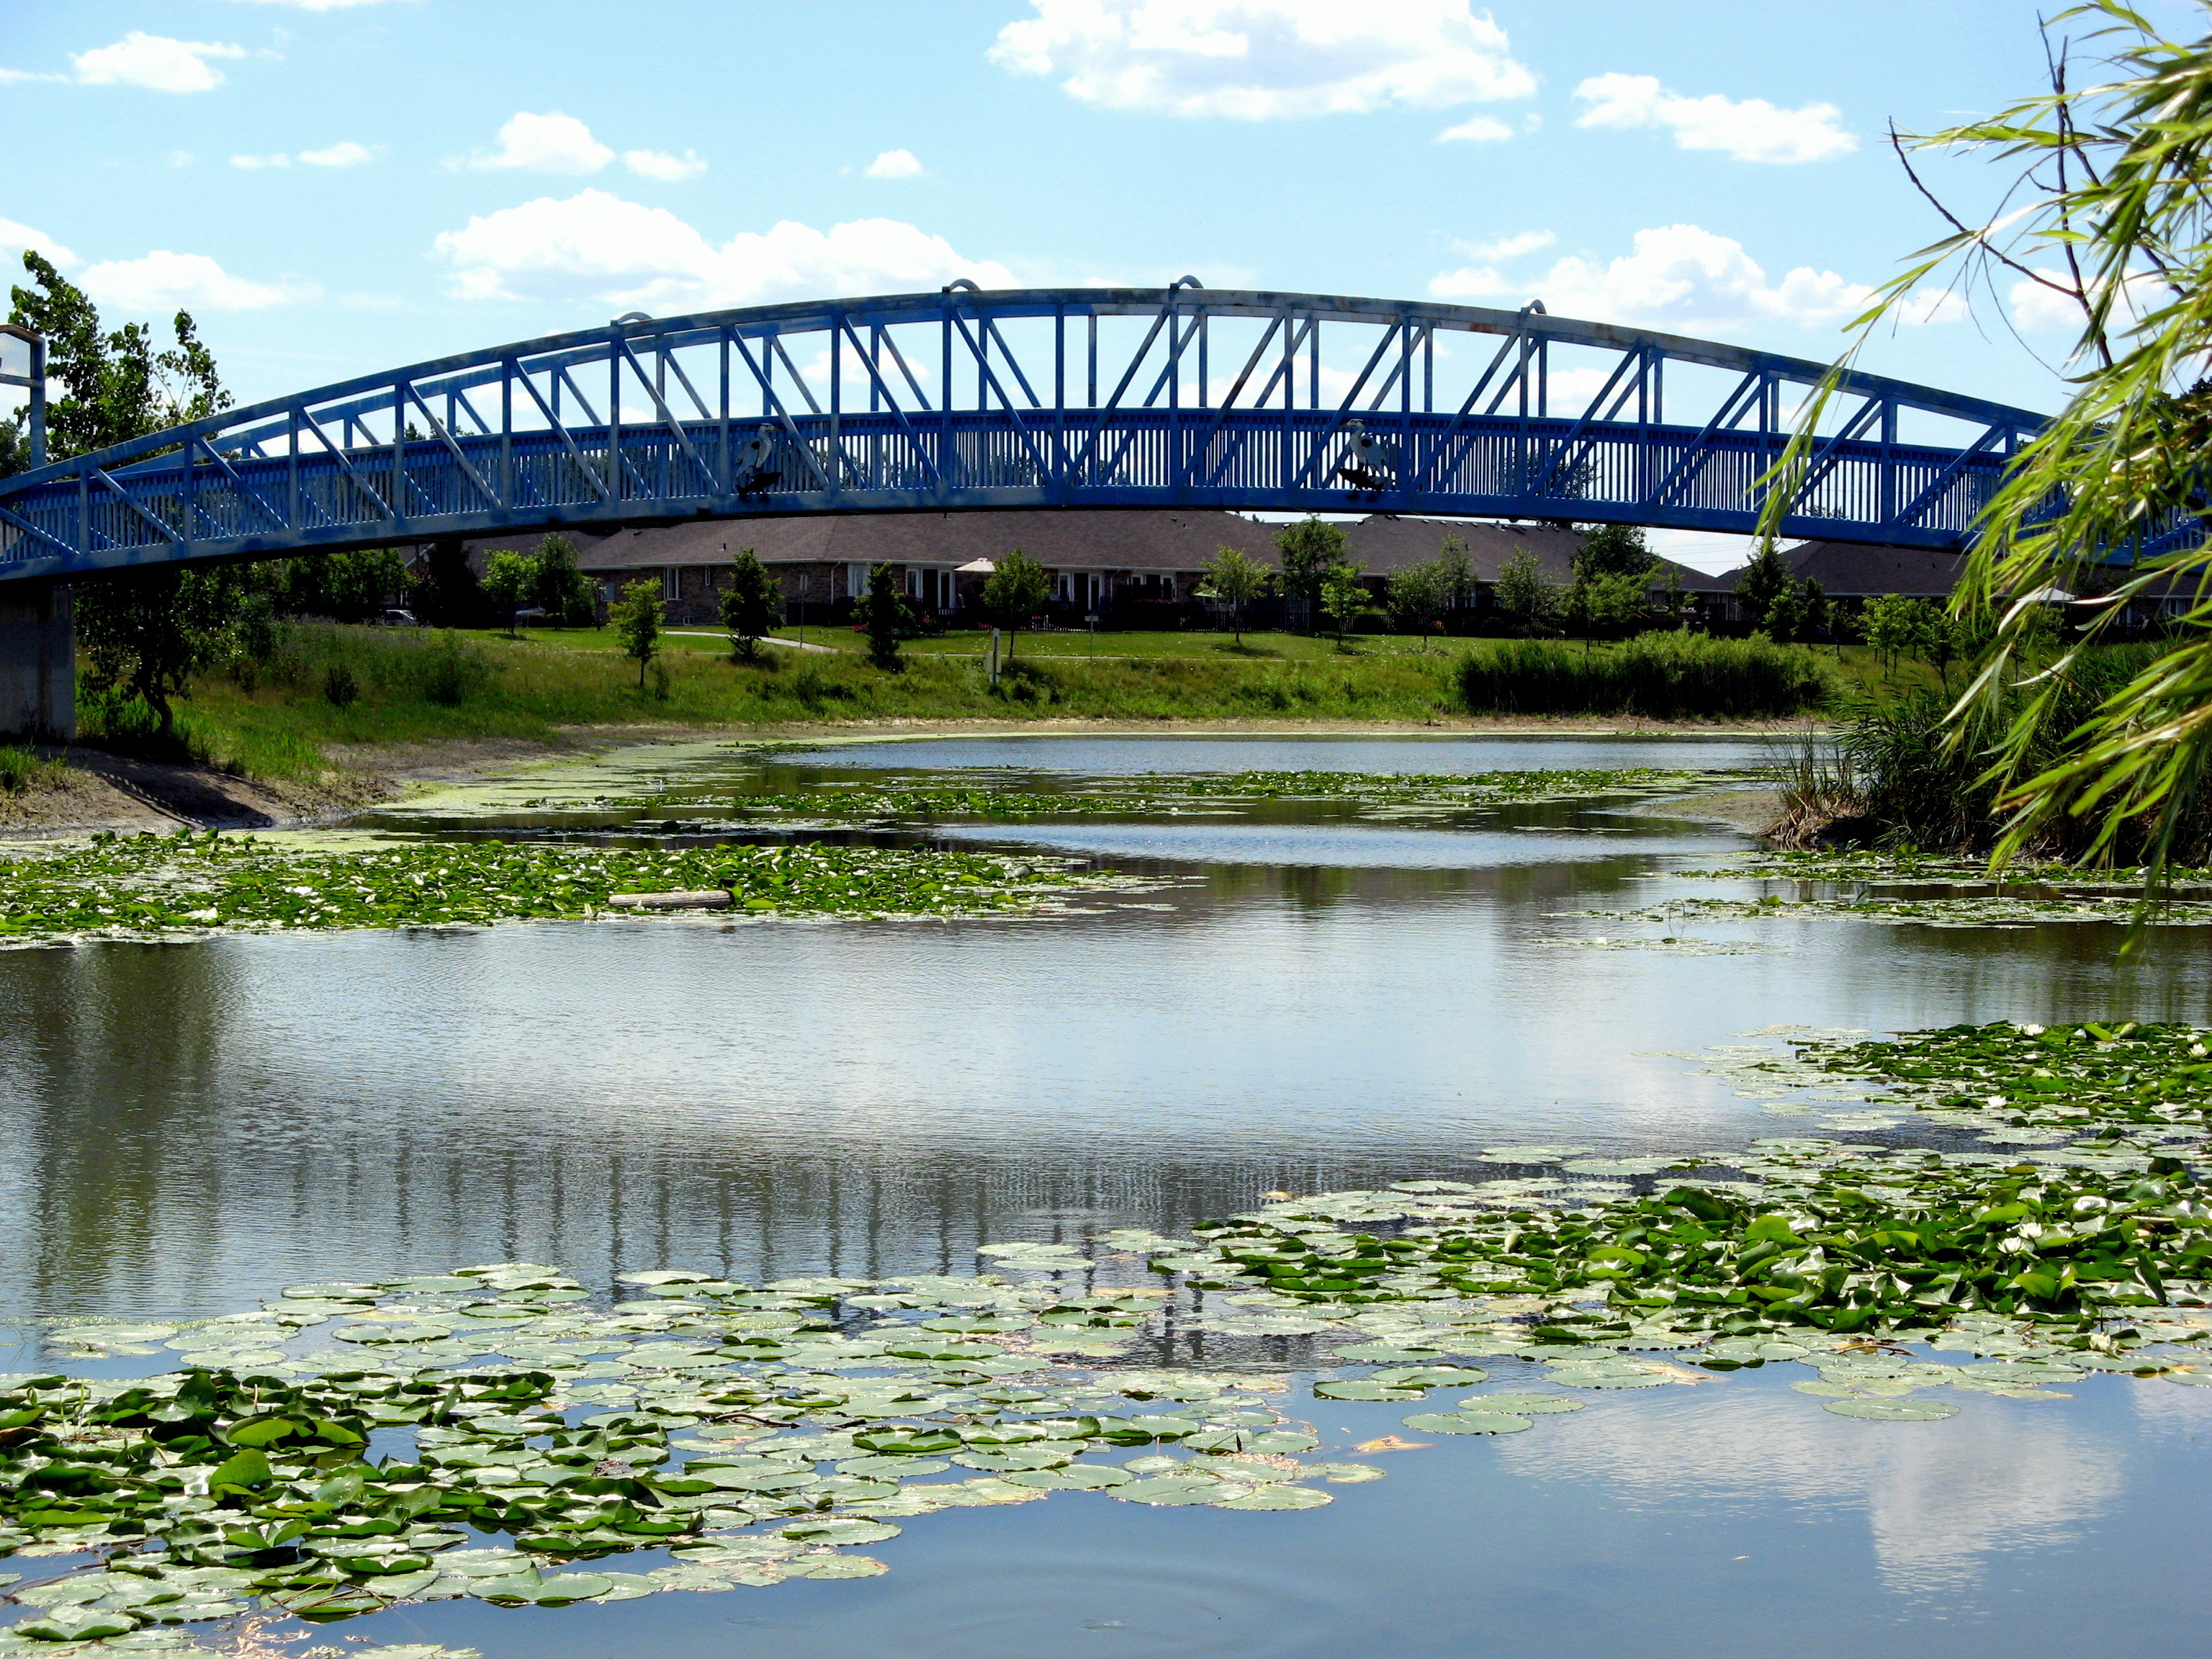 Blue Heron Bridge